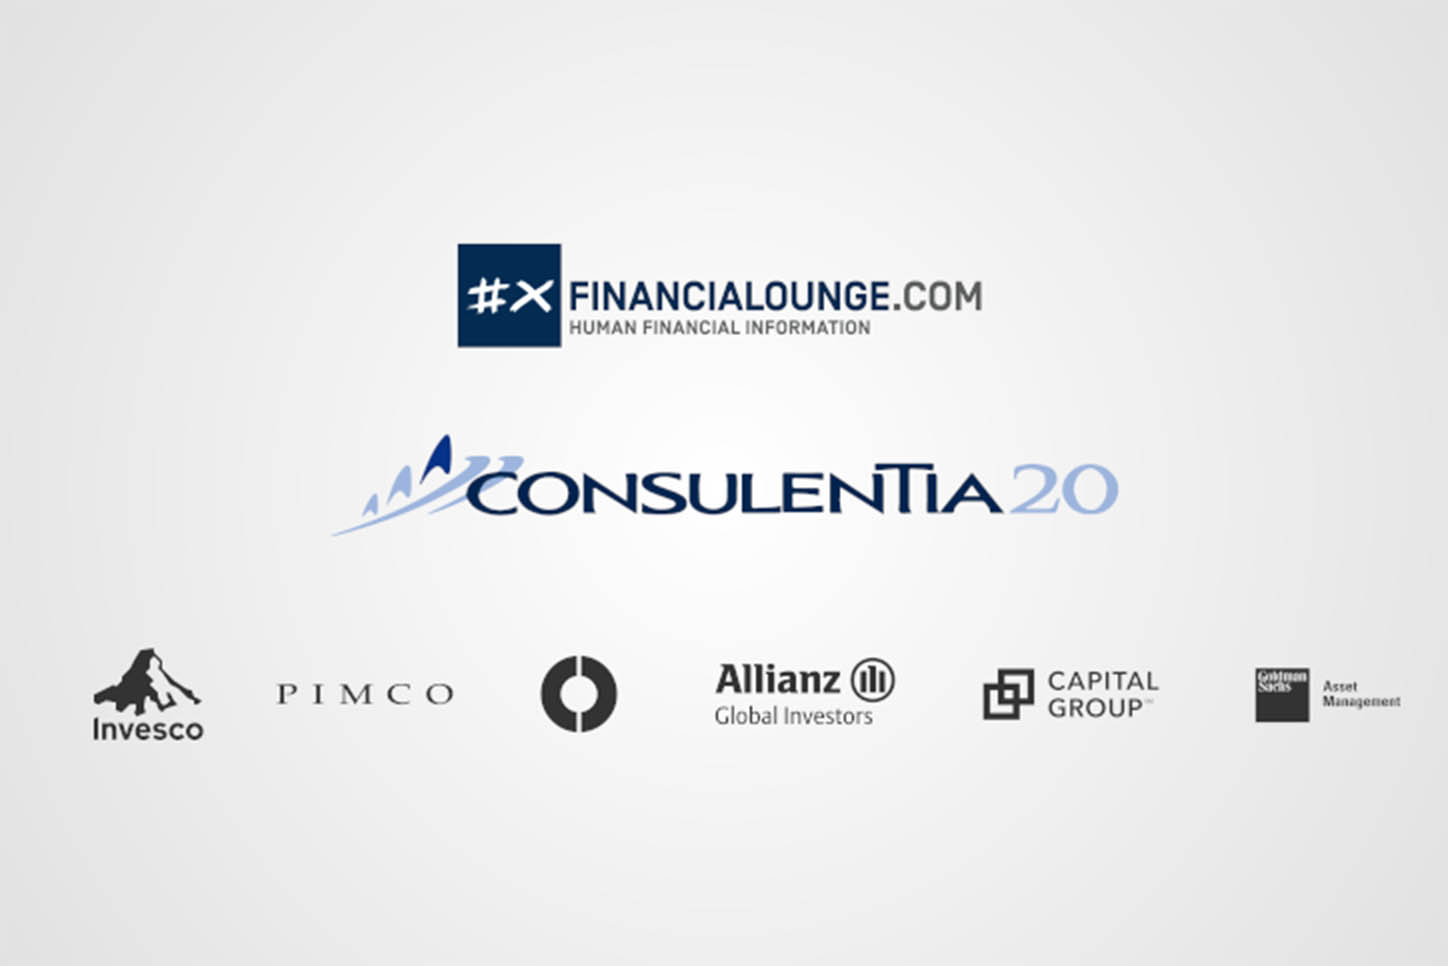 financialounge -  AllianzGI Capital Group ConsulenTia20 Goldman Sachs Asset Management GSAM Invesco PIMCO Schroders